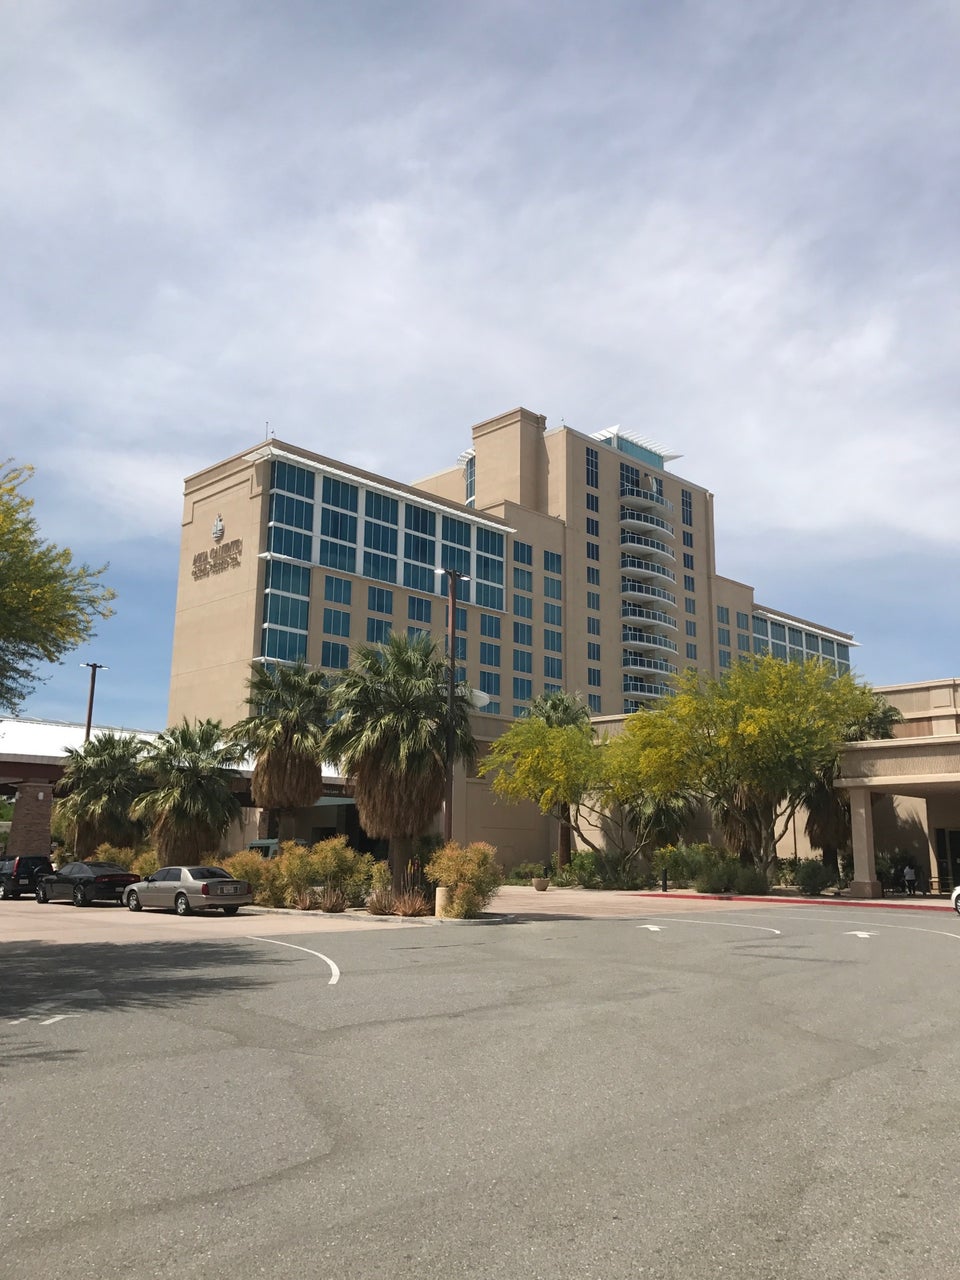 Photo of Agua Caliente Resort Casino Spa Rancho Mirage